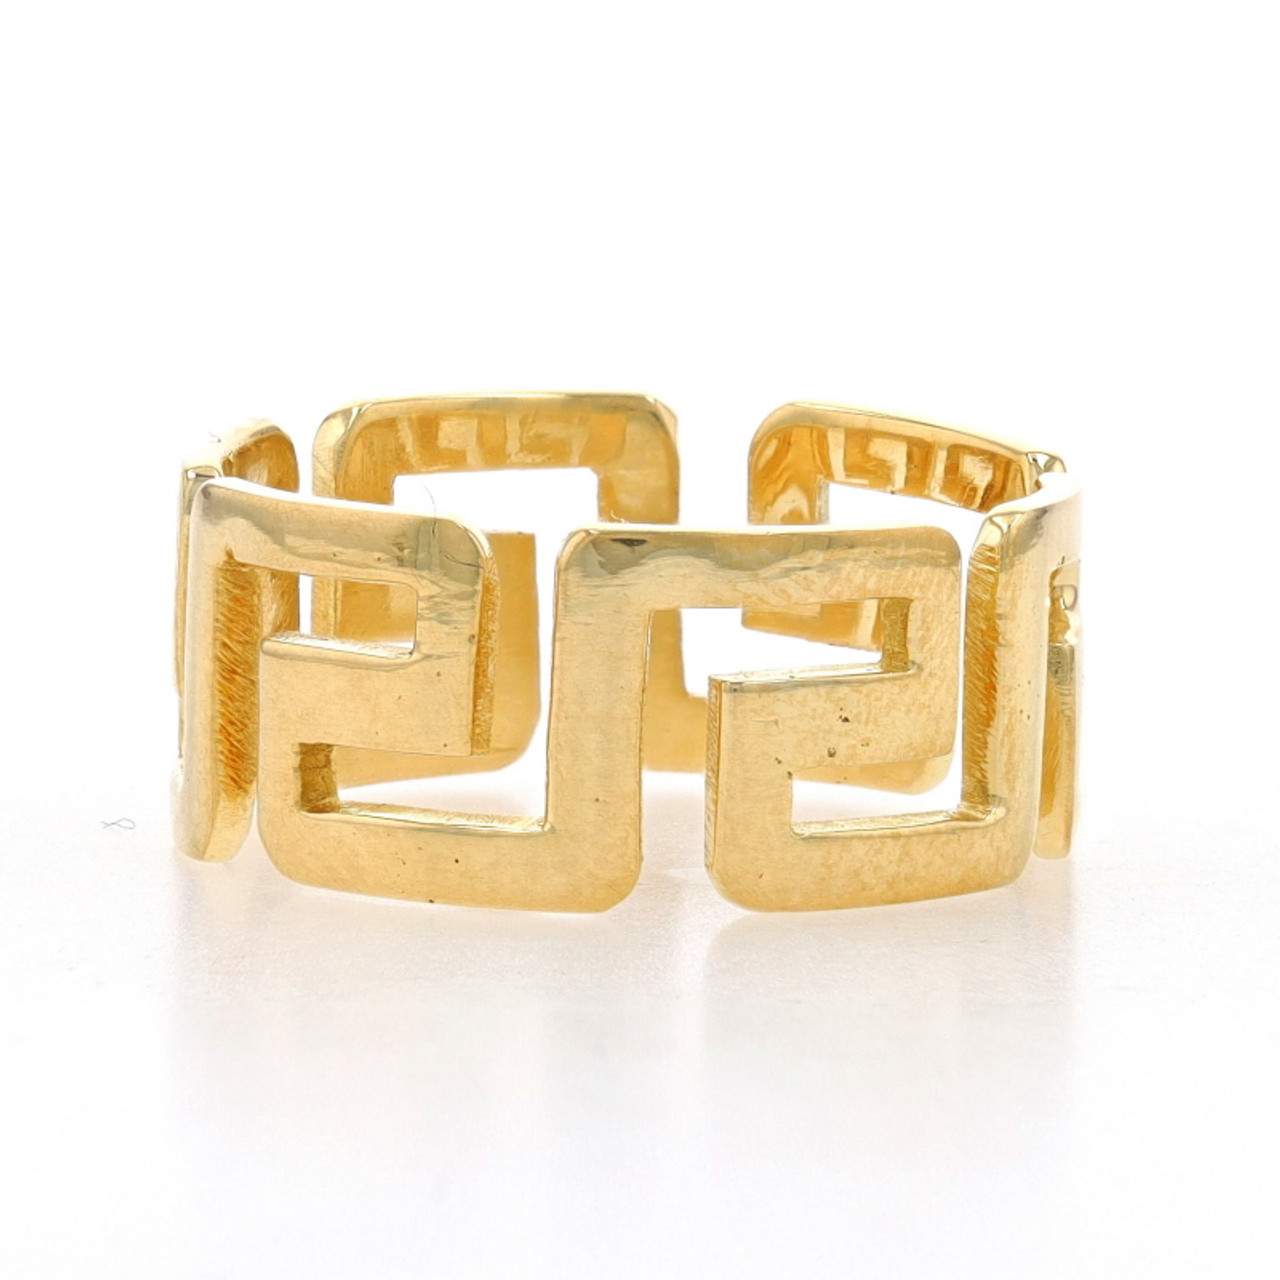 14ct Yellow Gold Greek Key Ring - Veronica's Jewellery